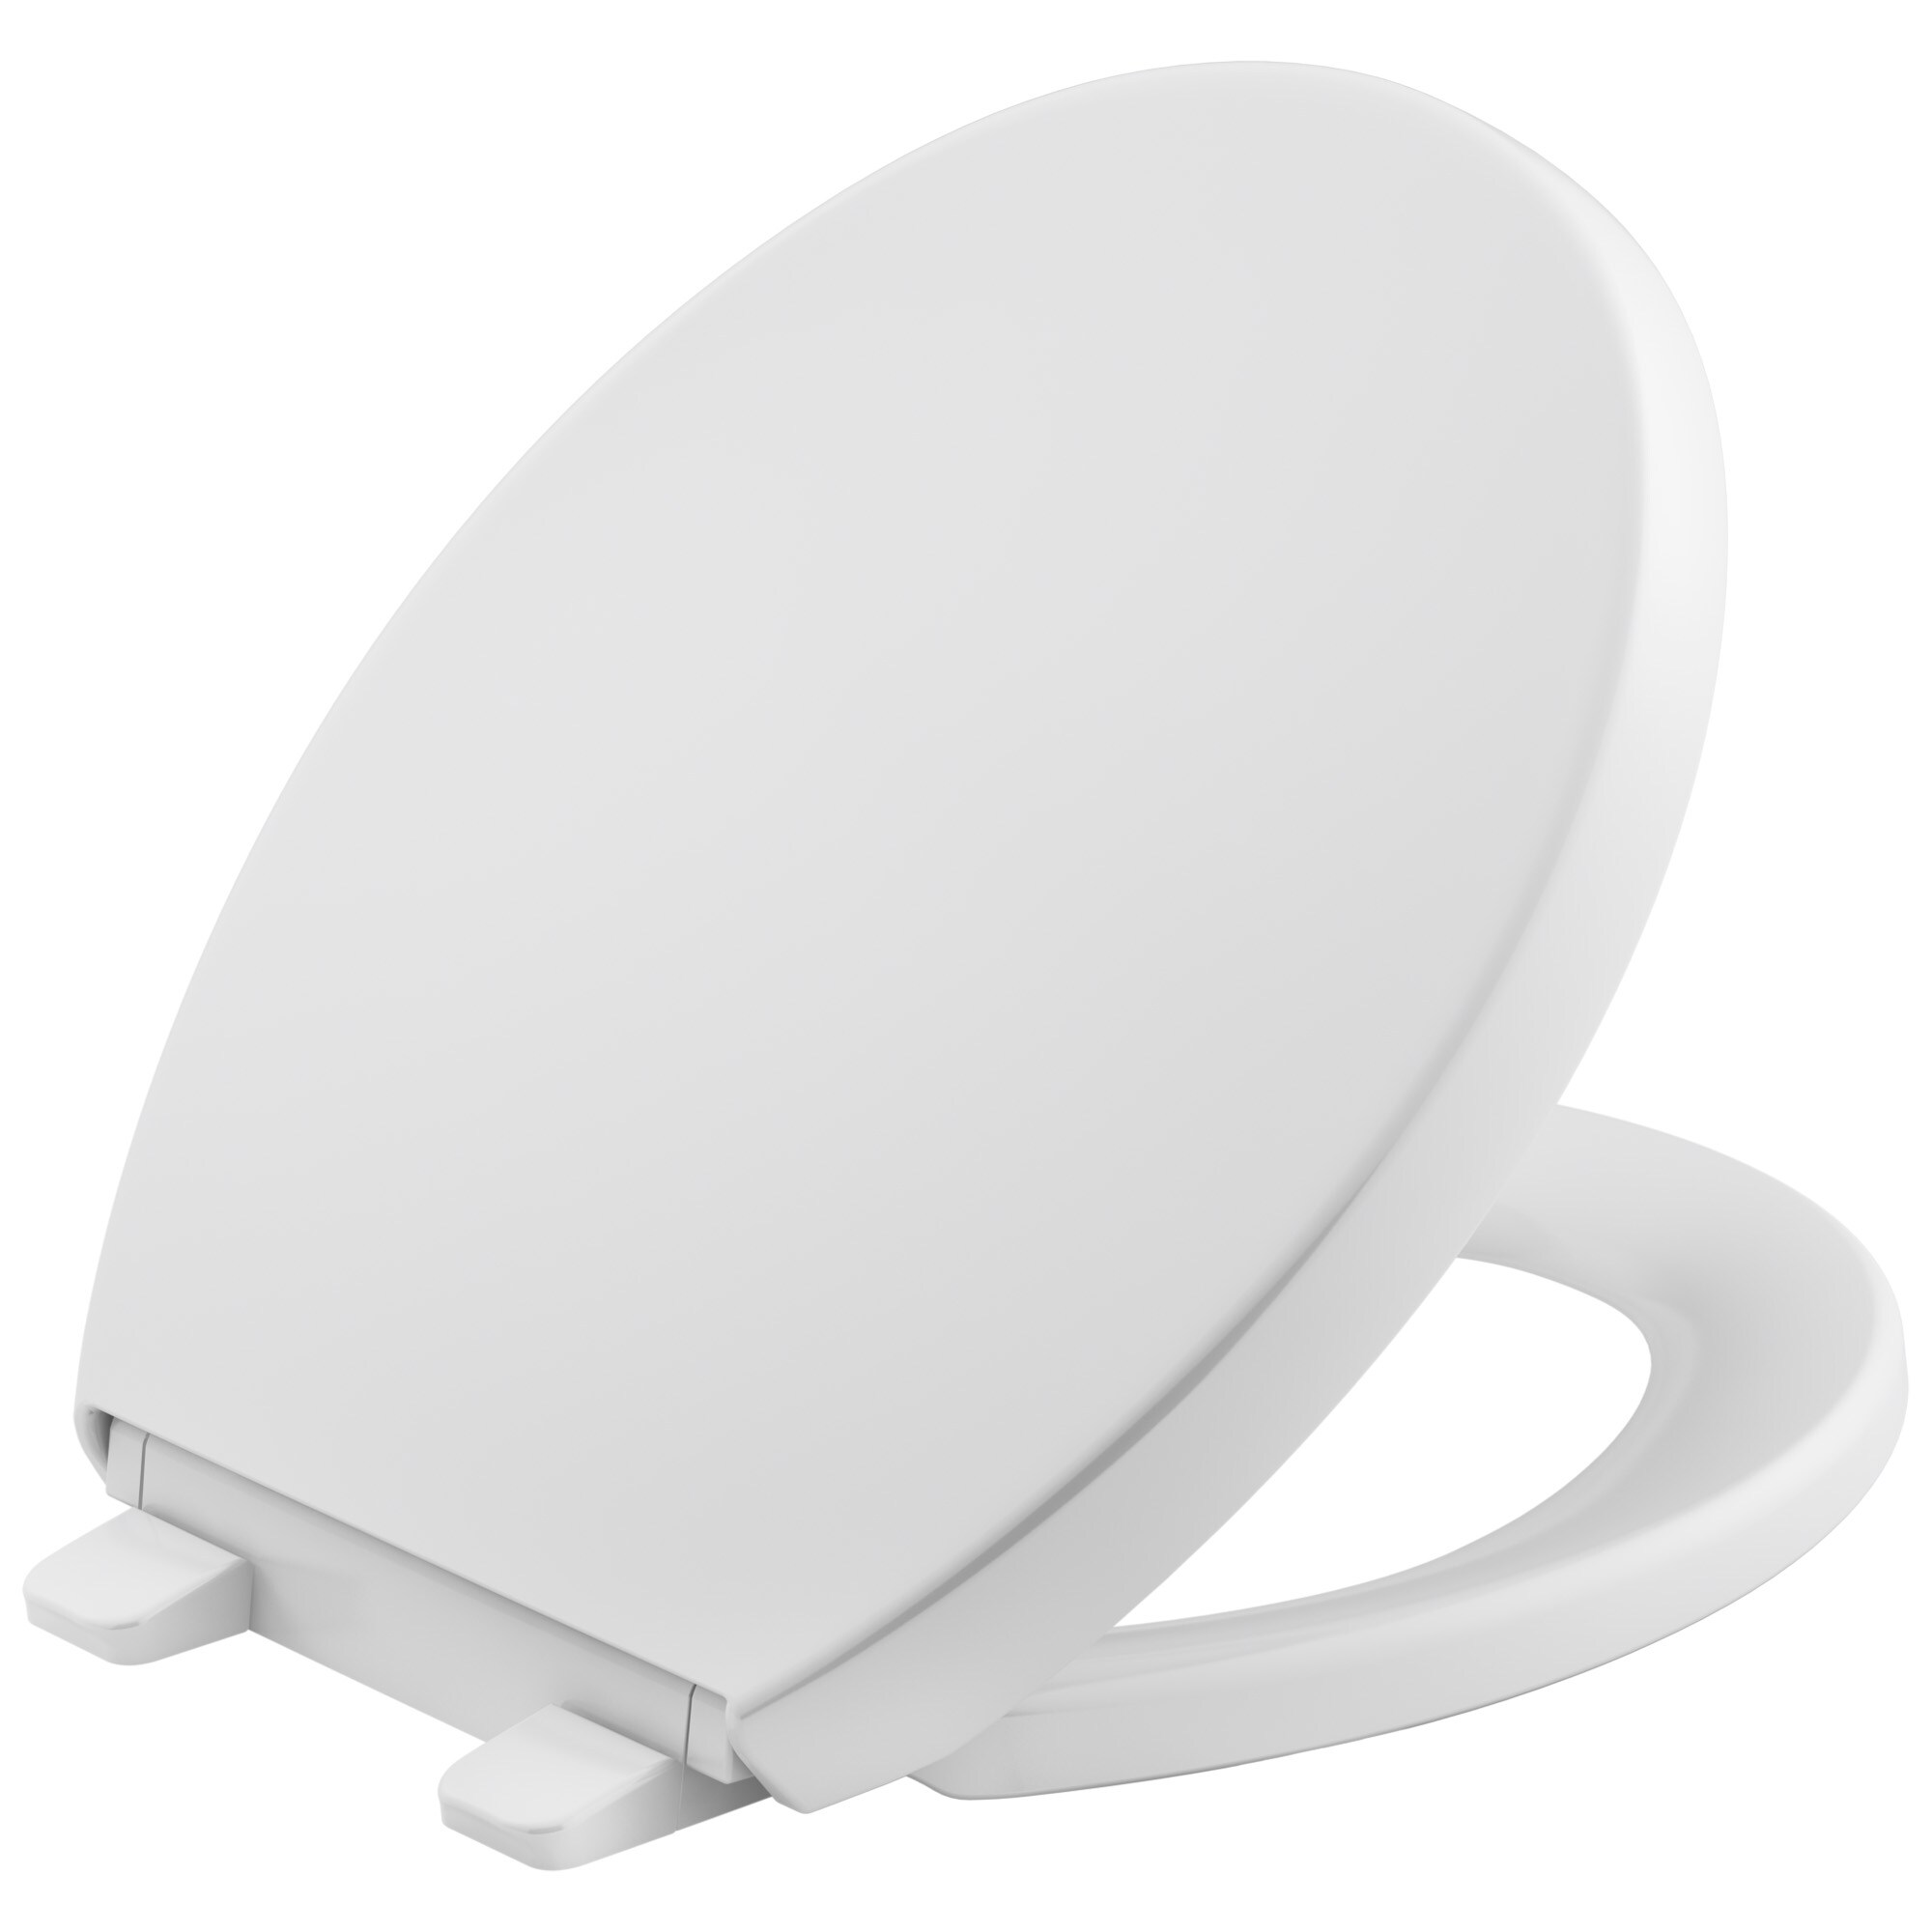 Kohler Span Square Quiet Close Toilet Seat cover in White – Kohler